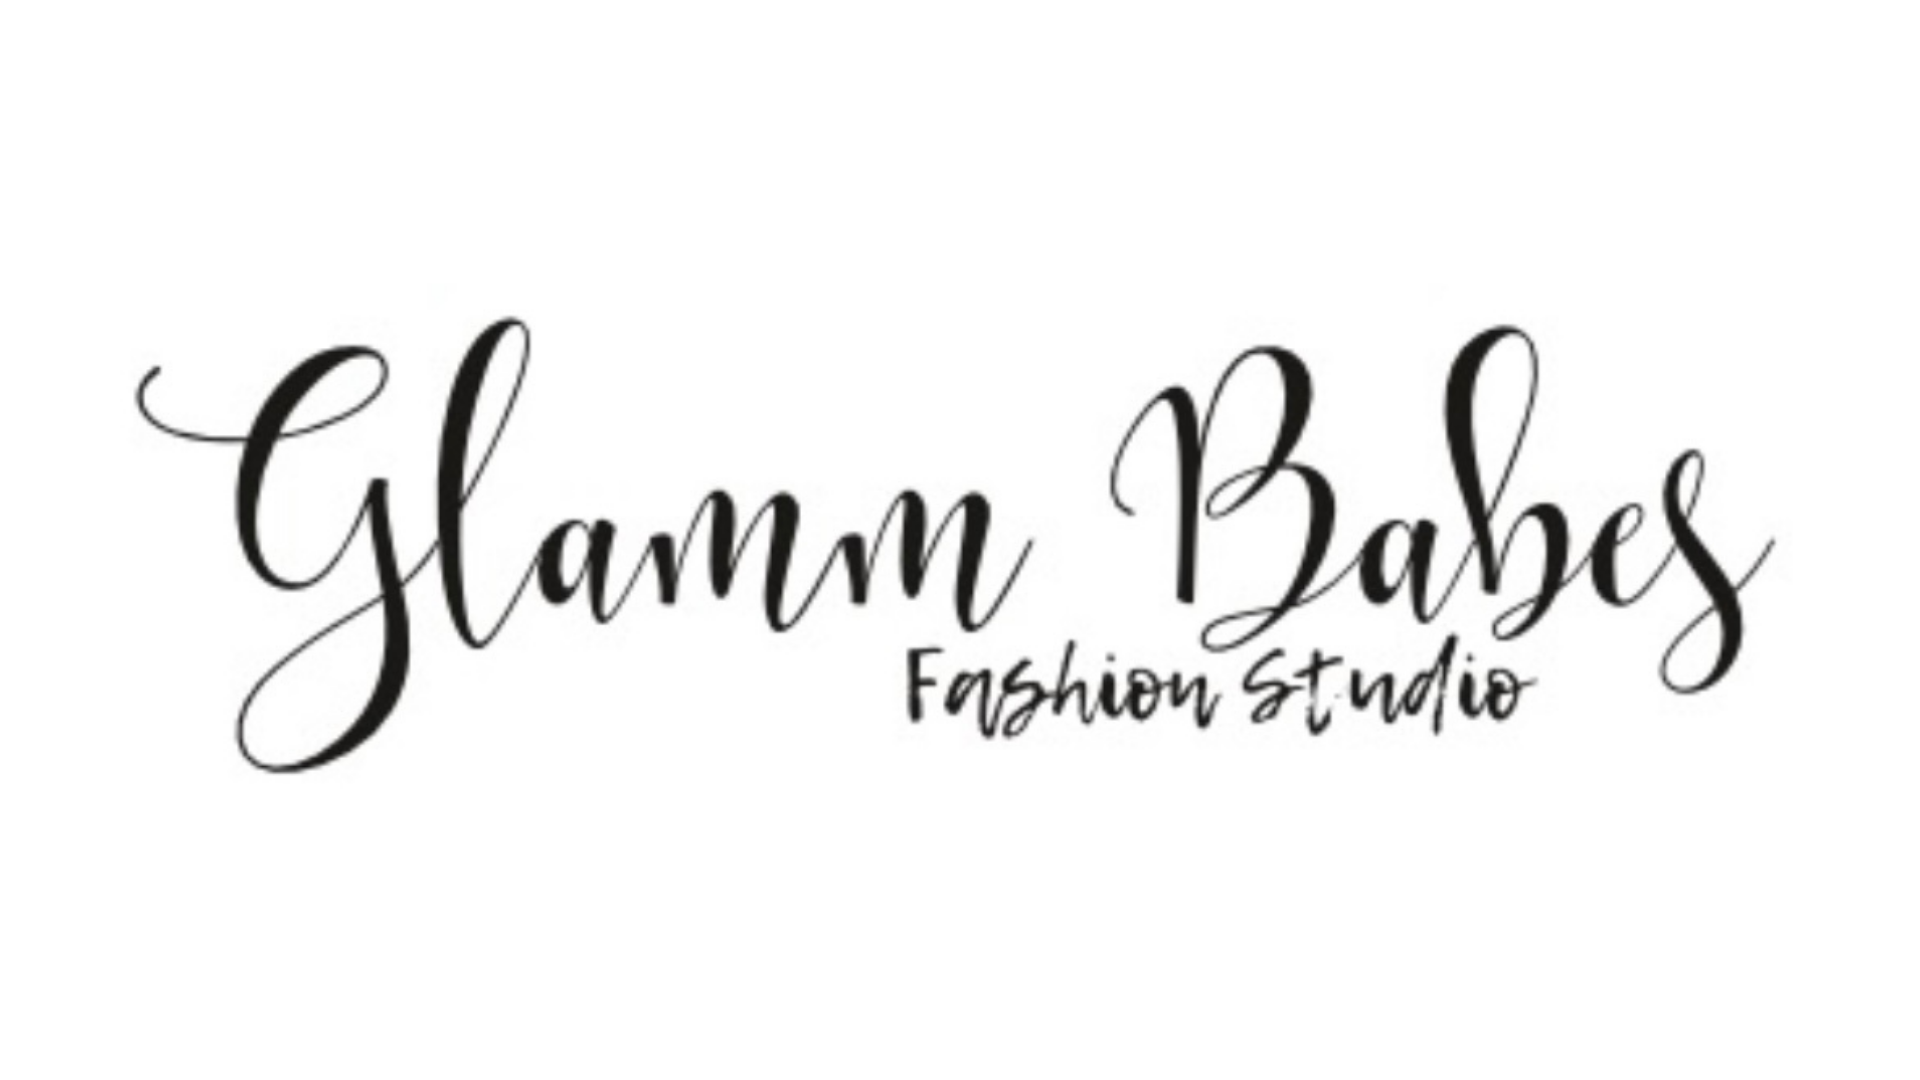 GLAMM BABES LLC